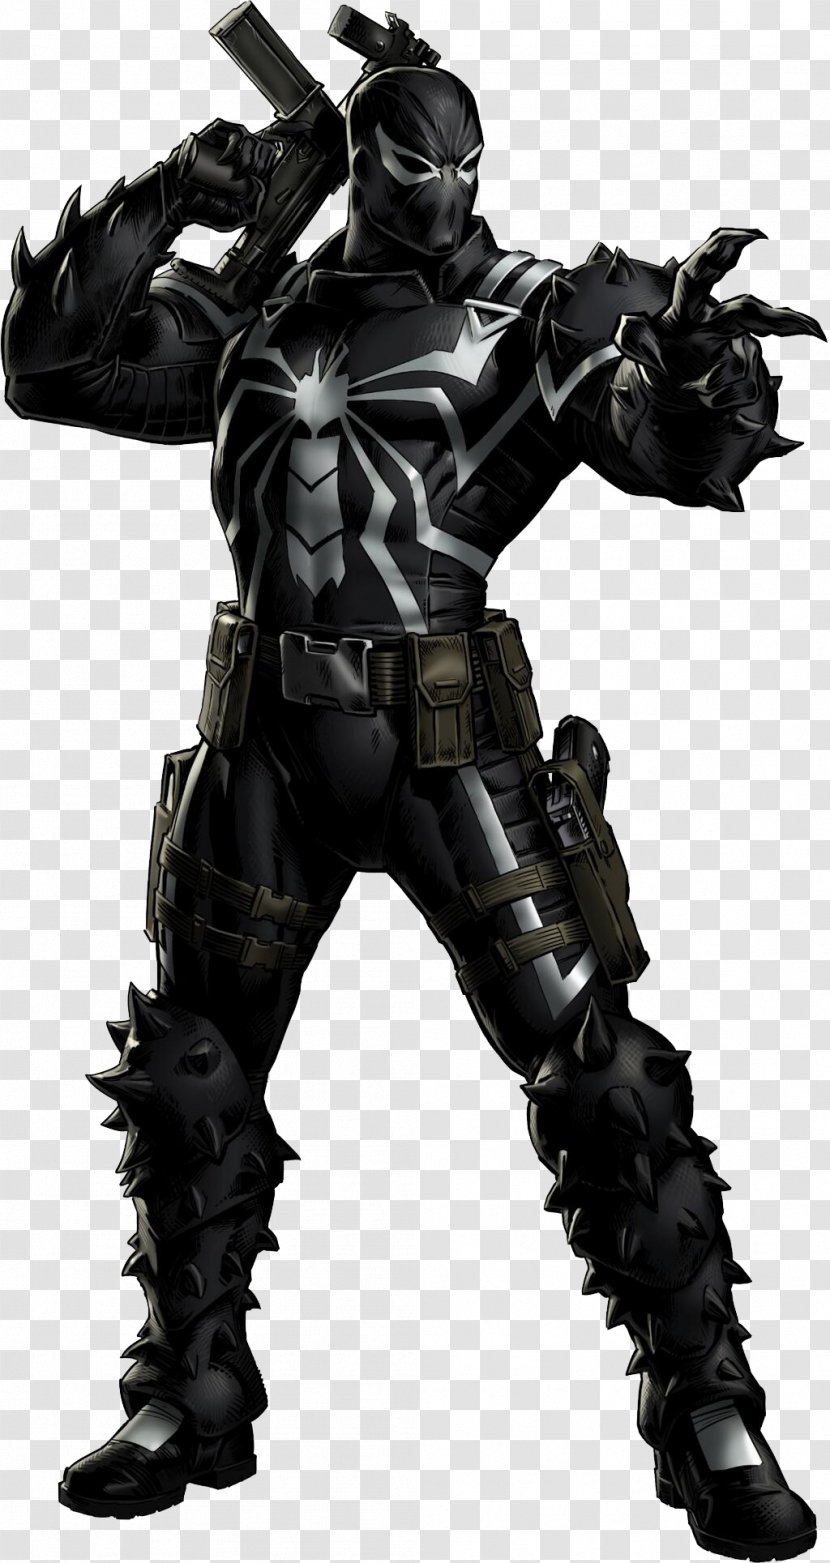 Marvel: Avengers Alliance Flash Thompson Punisher Spider-Man Venom - Machine - Carnage Transparent PNG